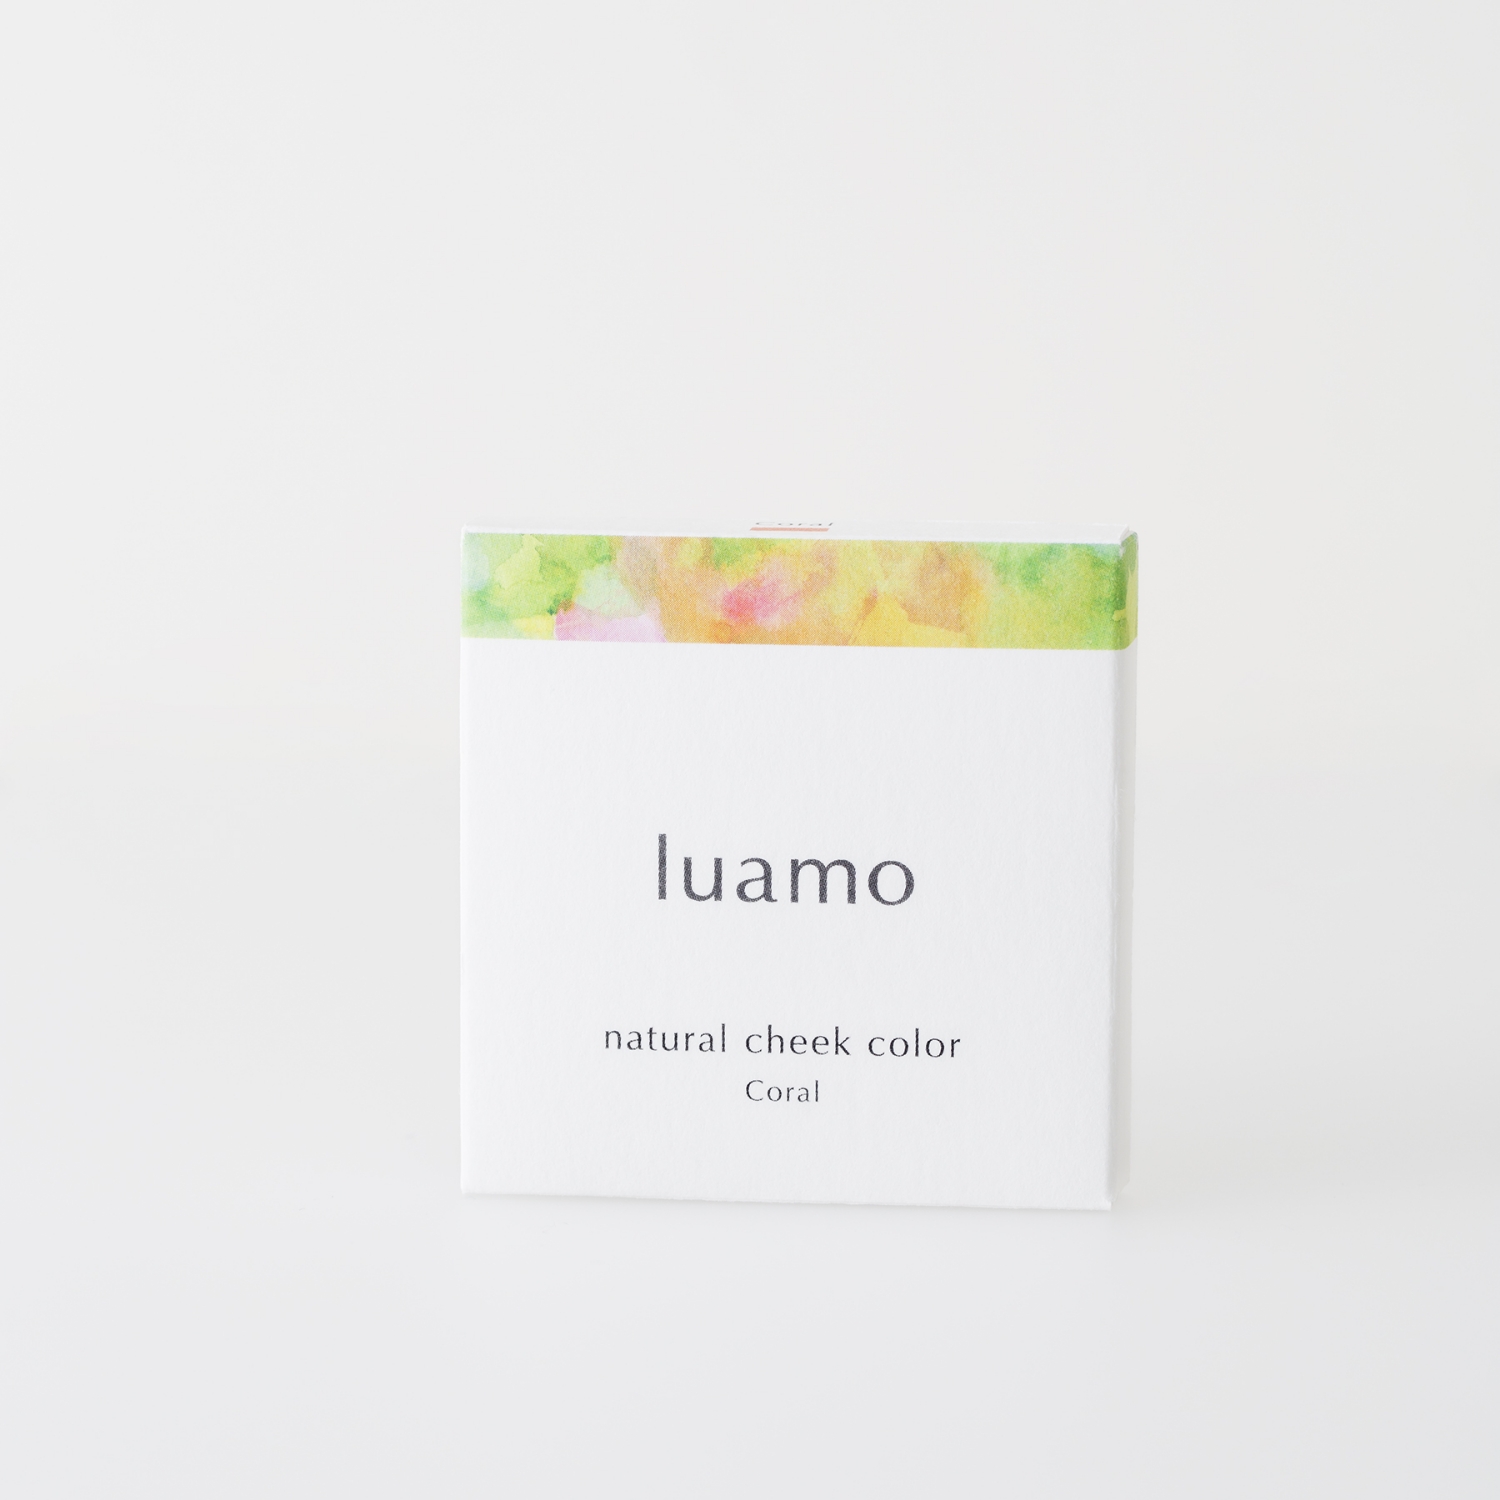 luamo/ナチュラルチークカラー